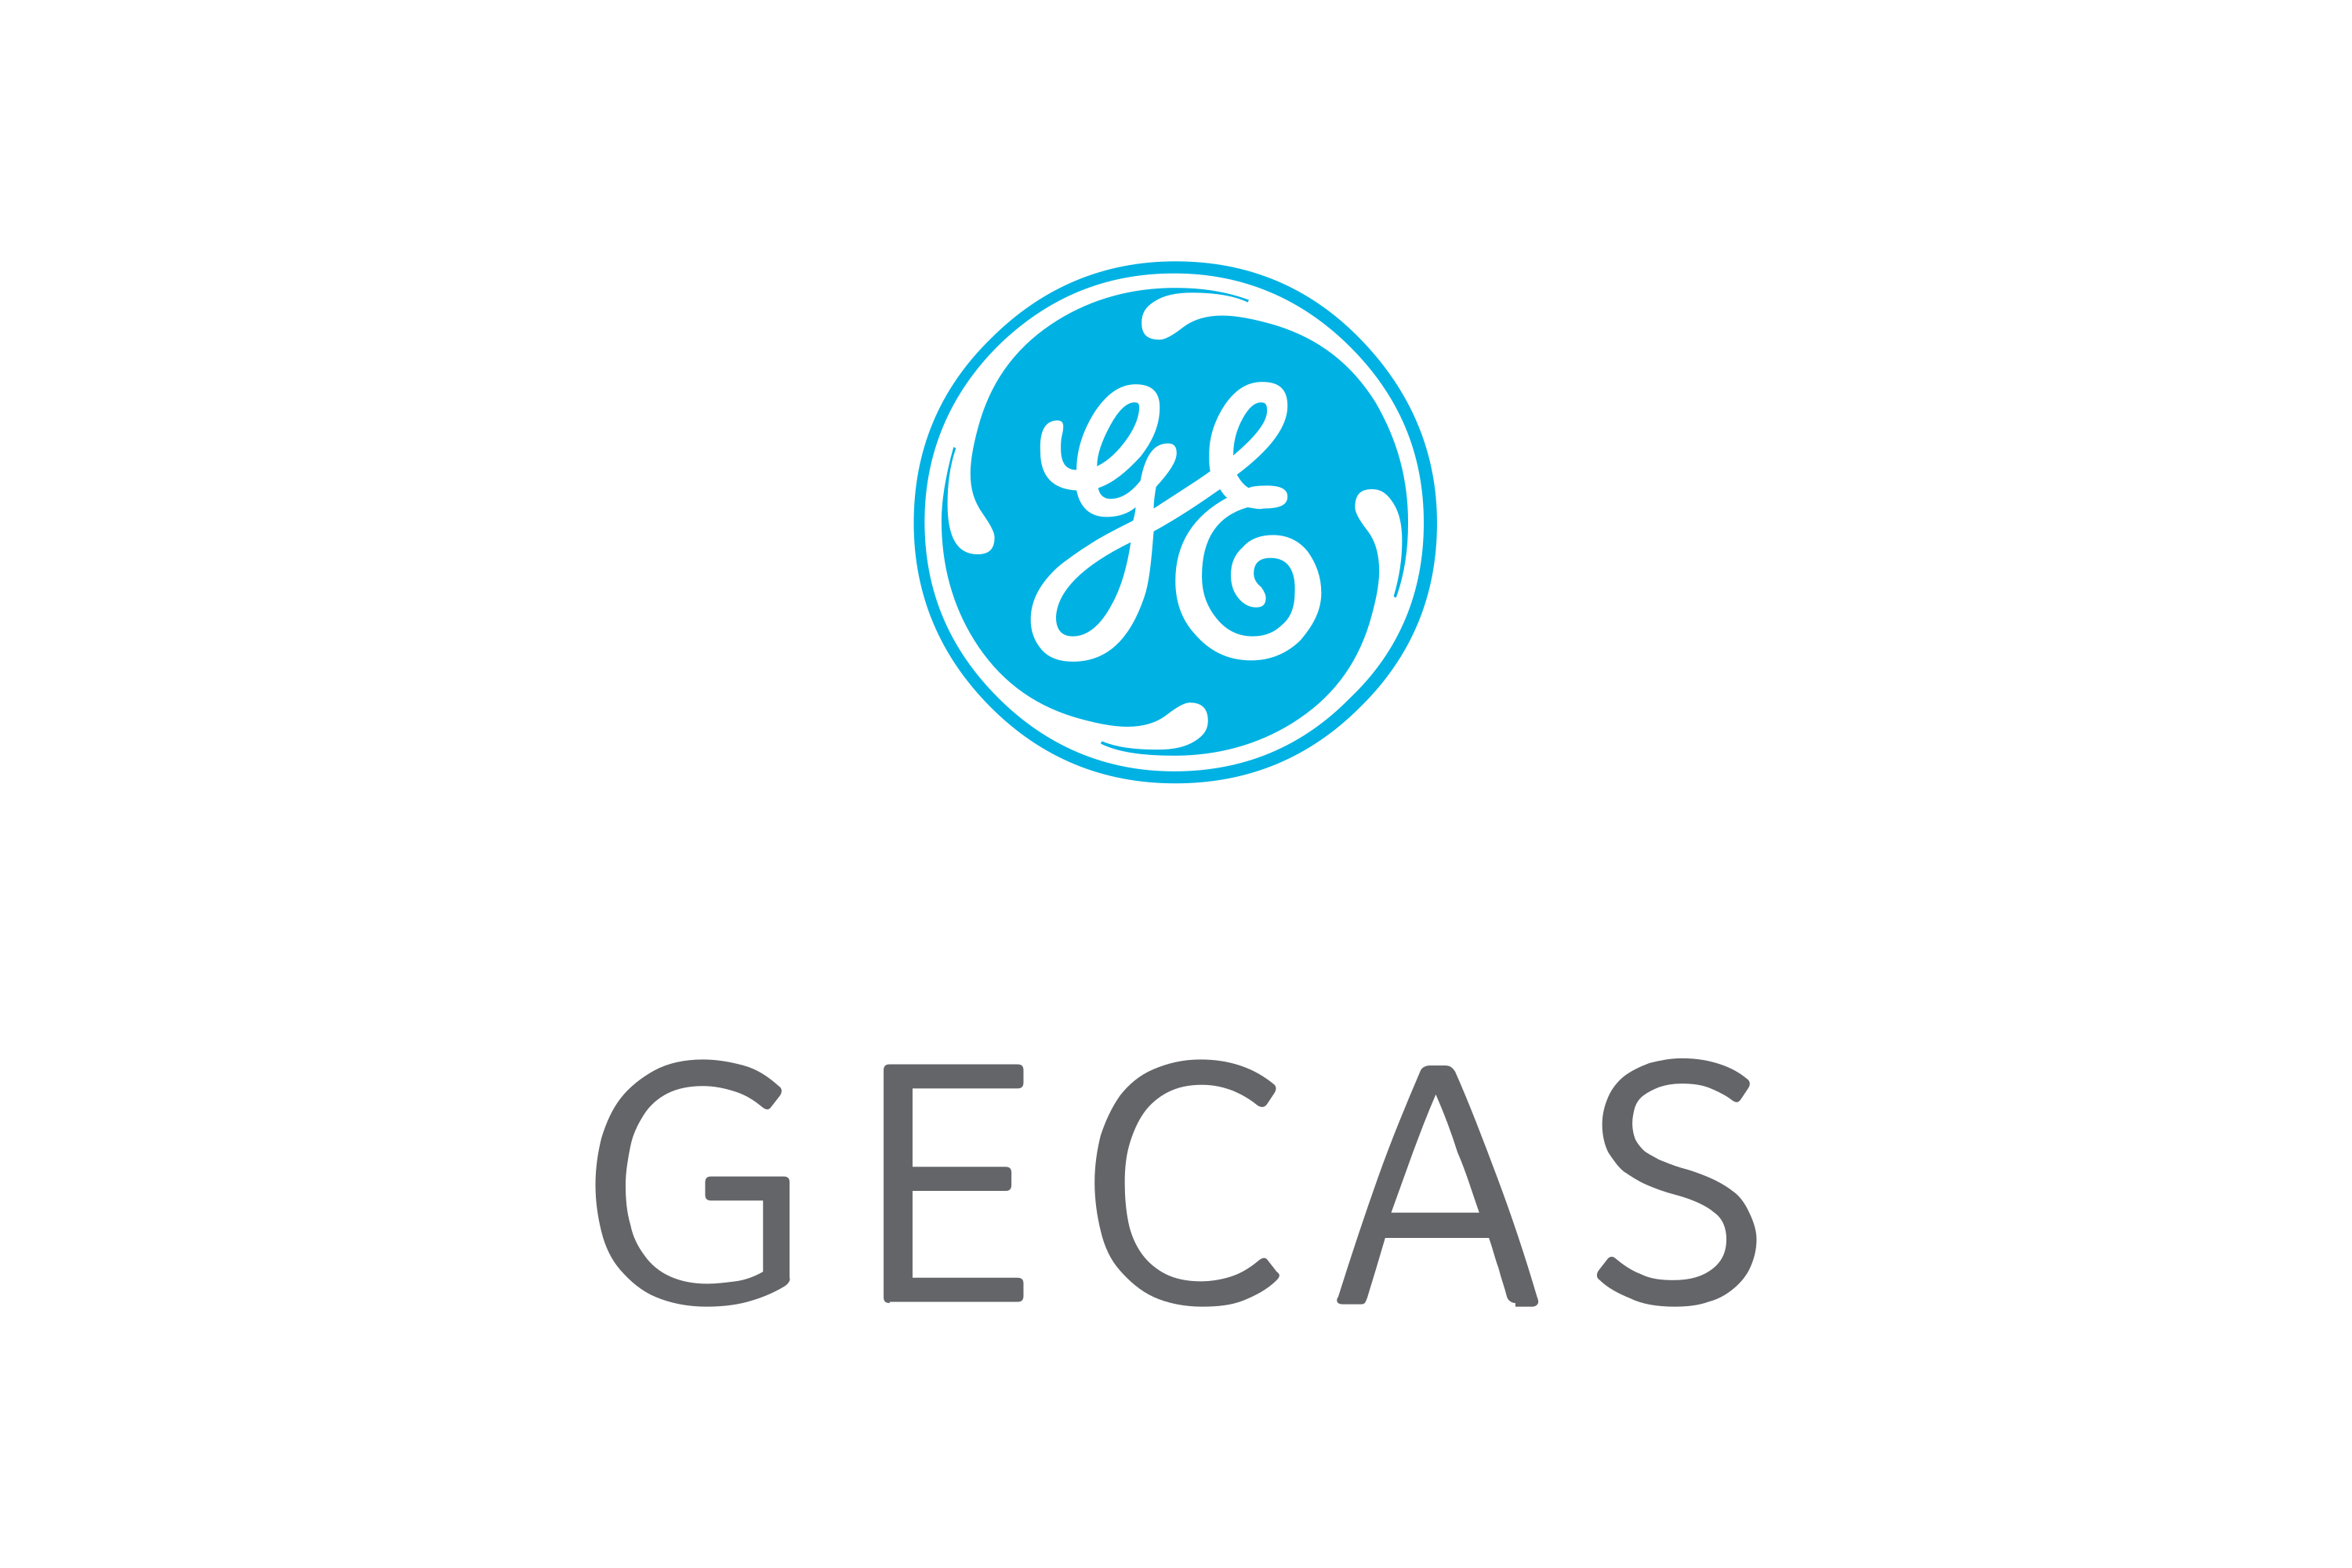 GE Capital Aviation Services Logo